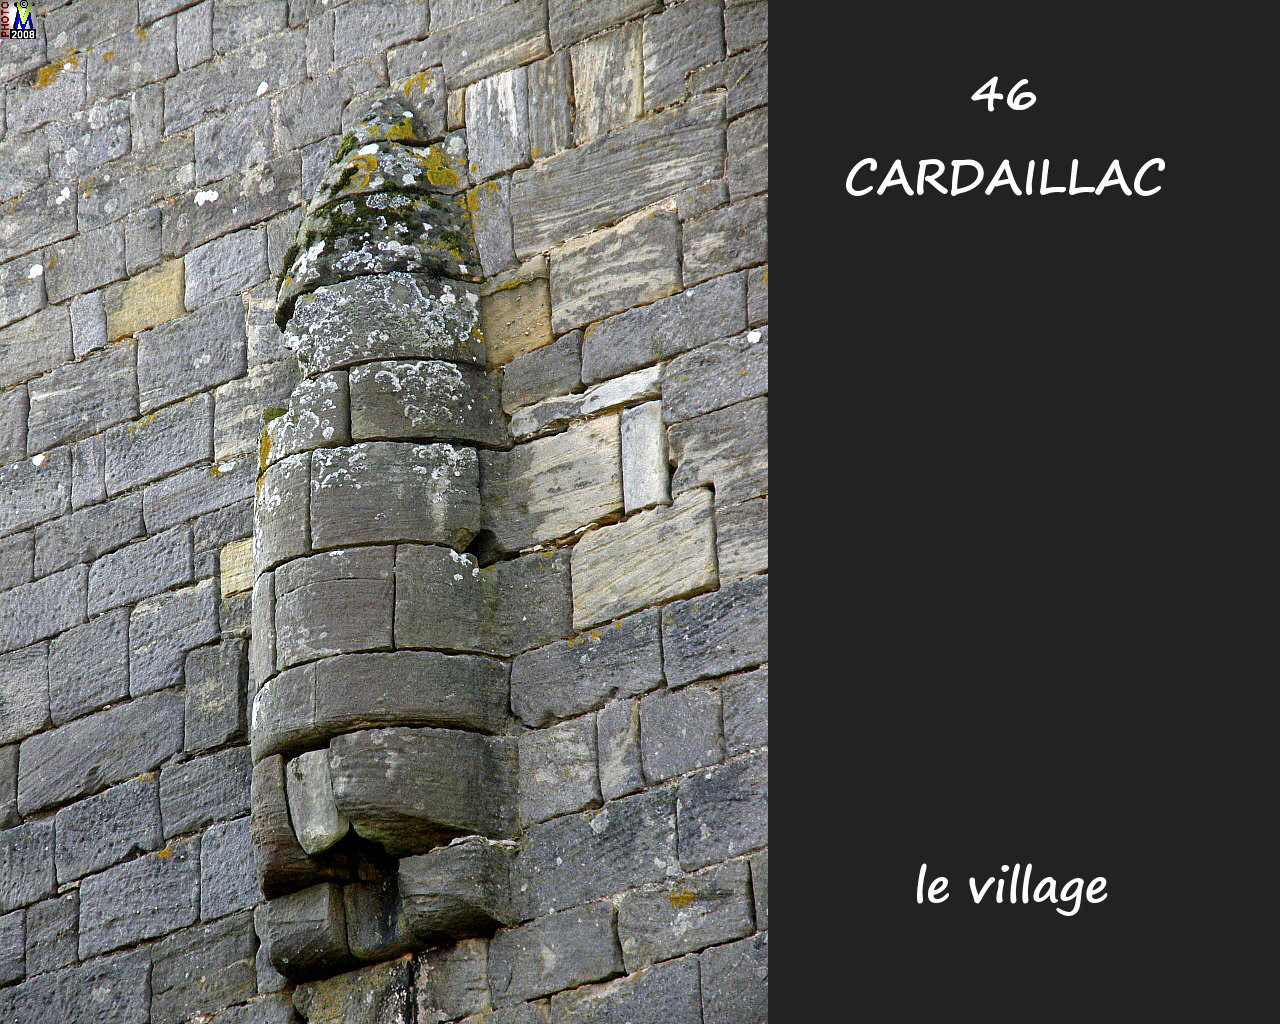 46CARDAILLAC_village_164.jpg